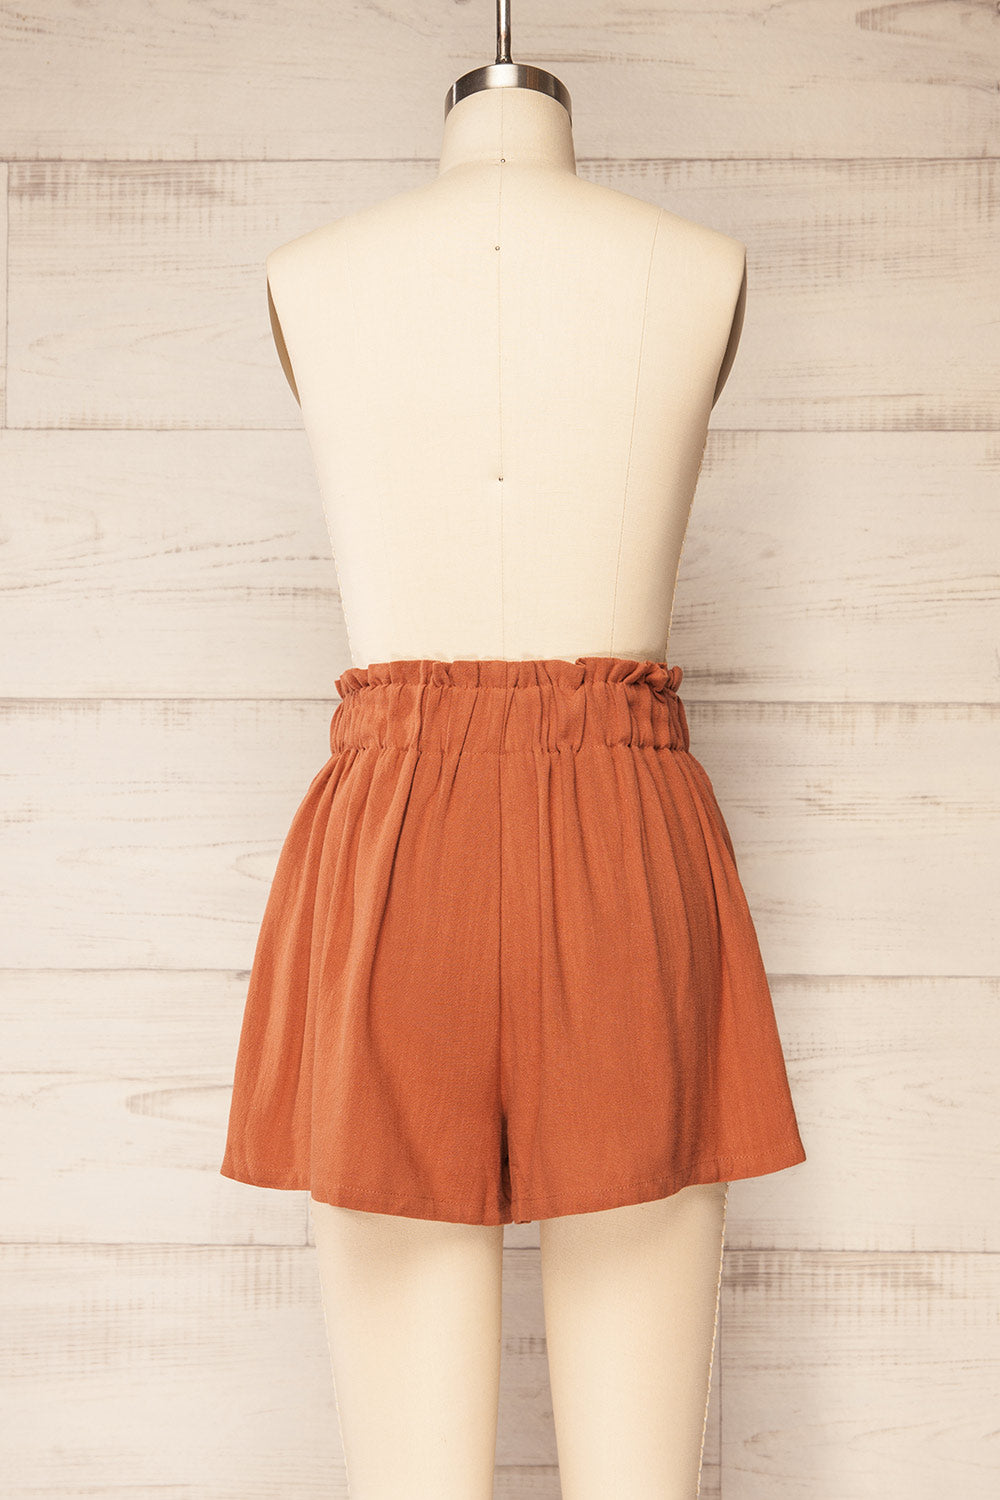 Hatherleigh Rust Loose Shorts w/ Elastic Waist | La petite garçonne back view